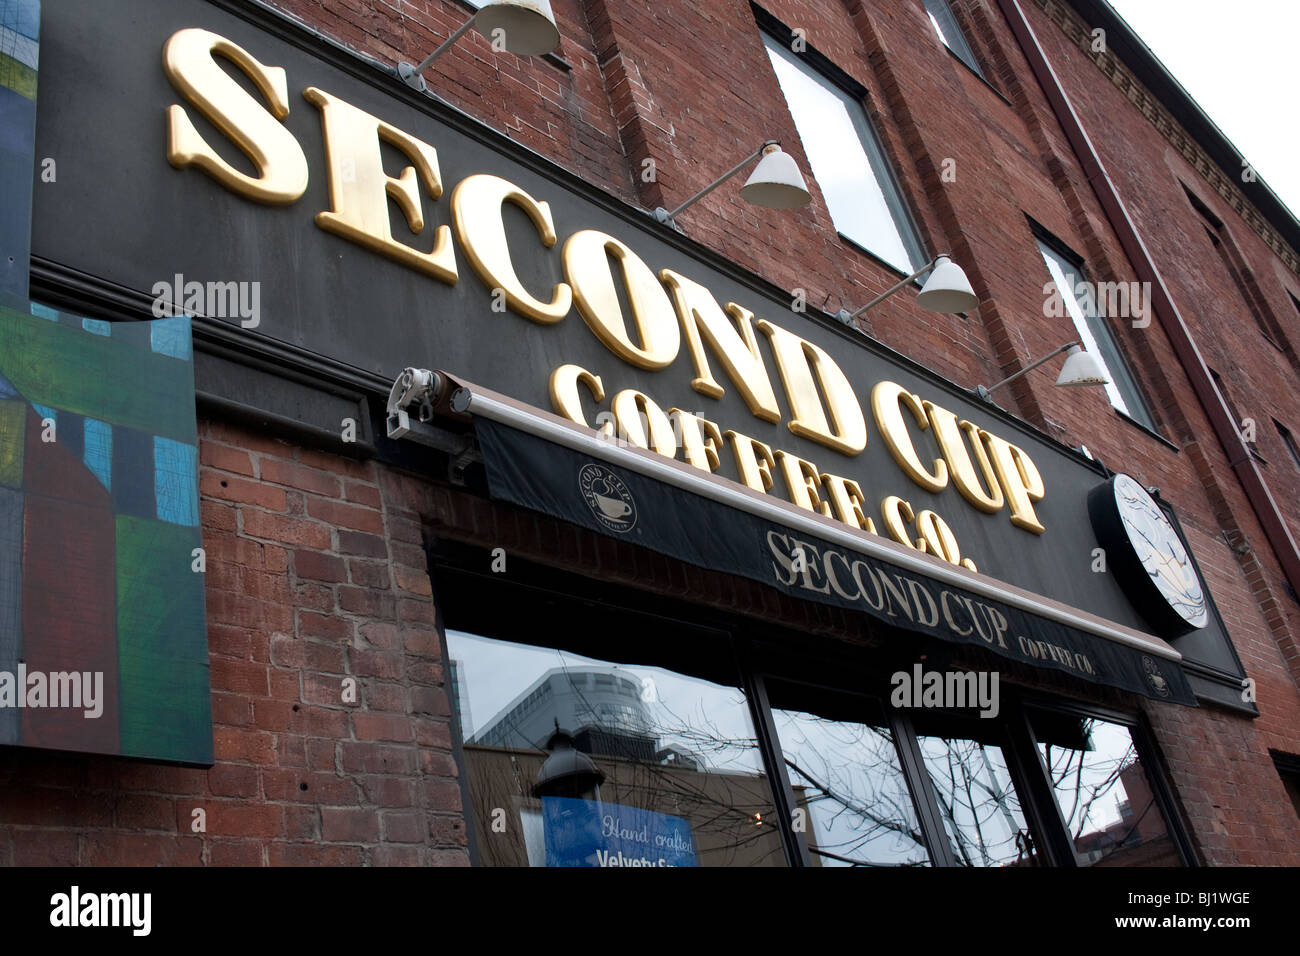 Canadian coffee shop in franchising seconda coppa Foto Stock